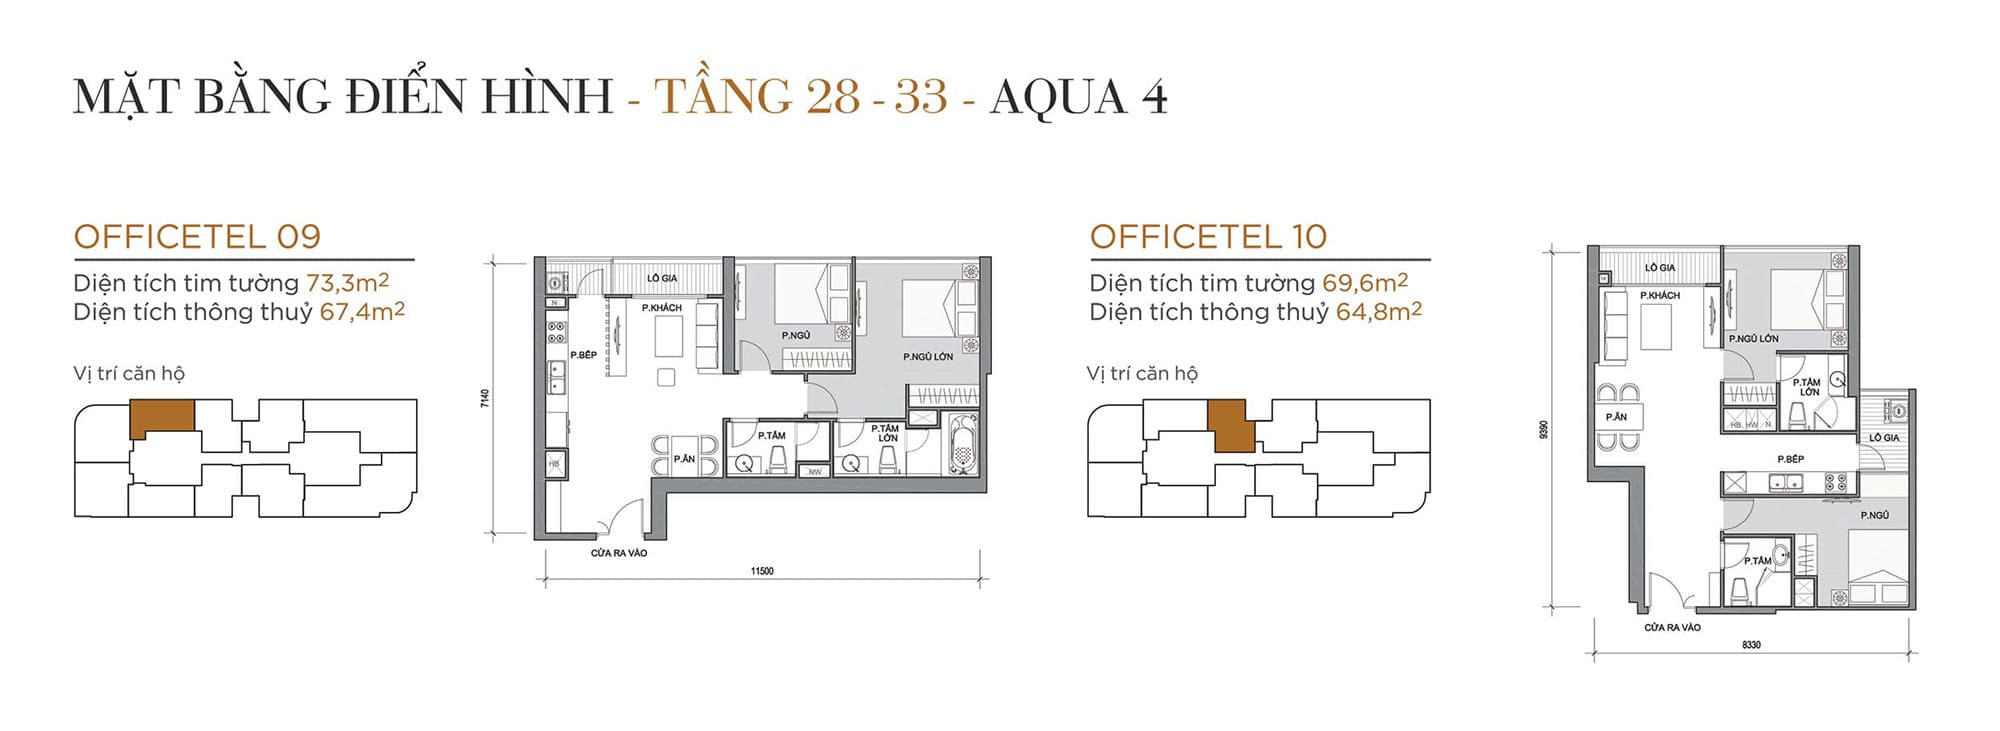 Layout căn hộ tầng 28 đến tầng 33 tòa Aqua 4 loại Officetel 09, Officetel 10.